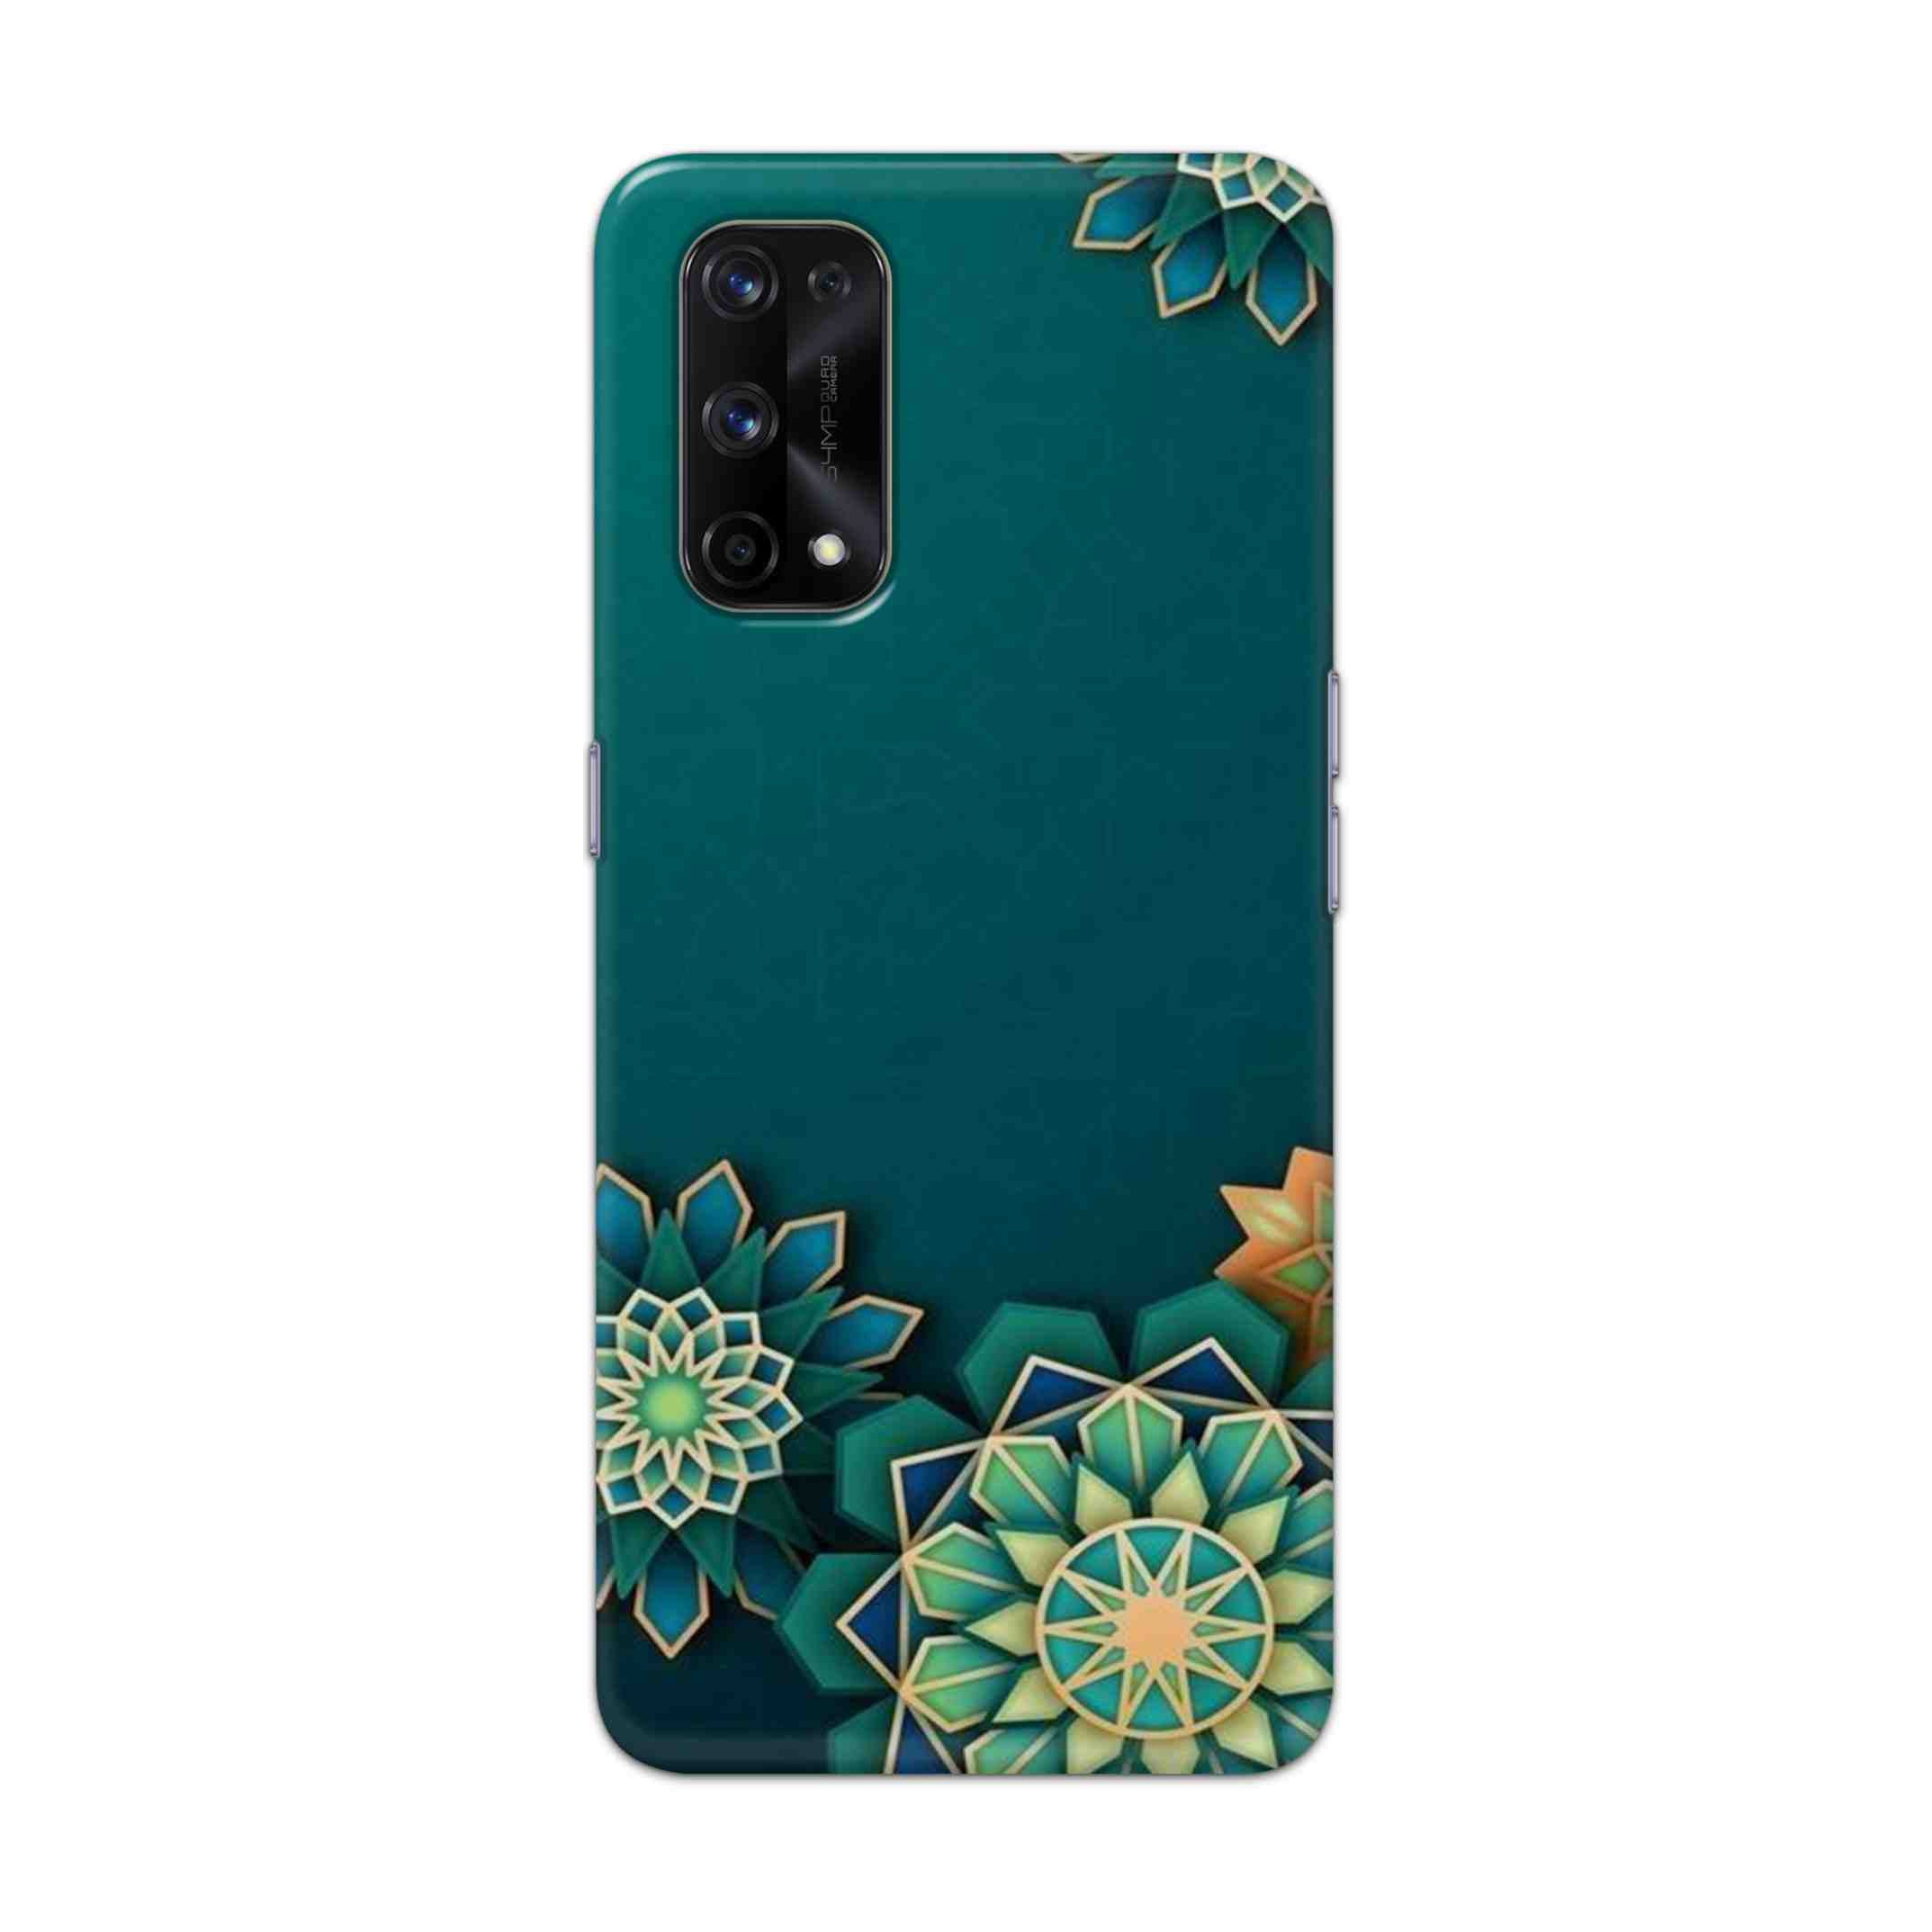 Buy Green Flower Hard Back Mobile Phone Case Cover For Realme X7 Pro Online